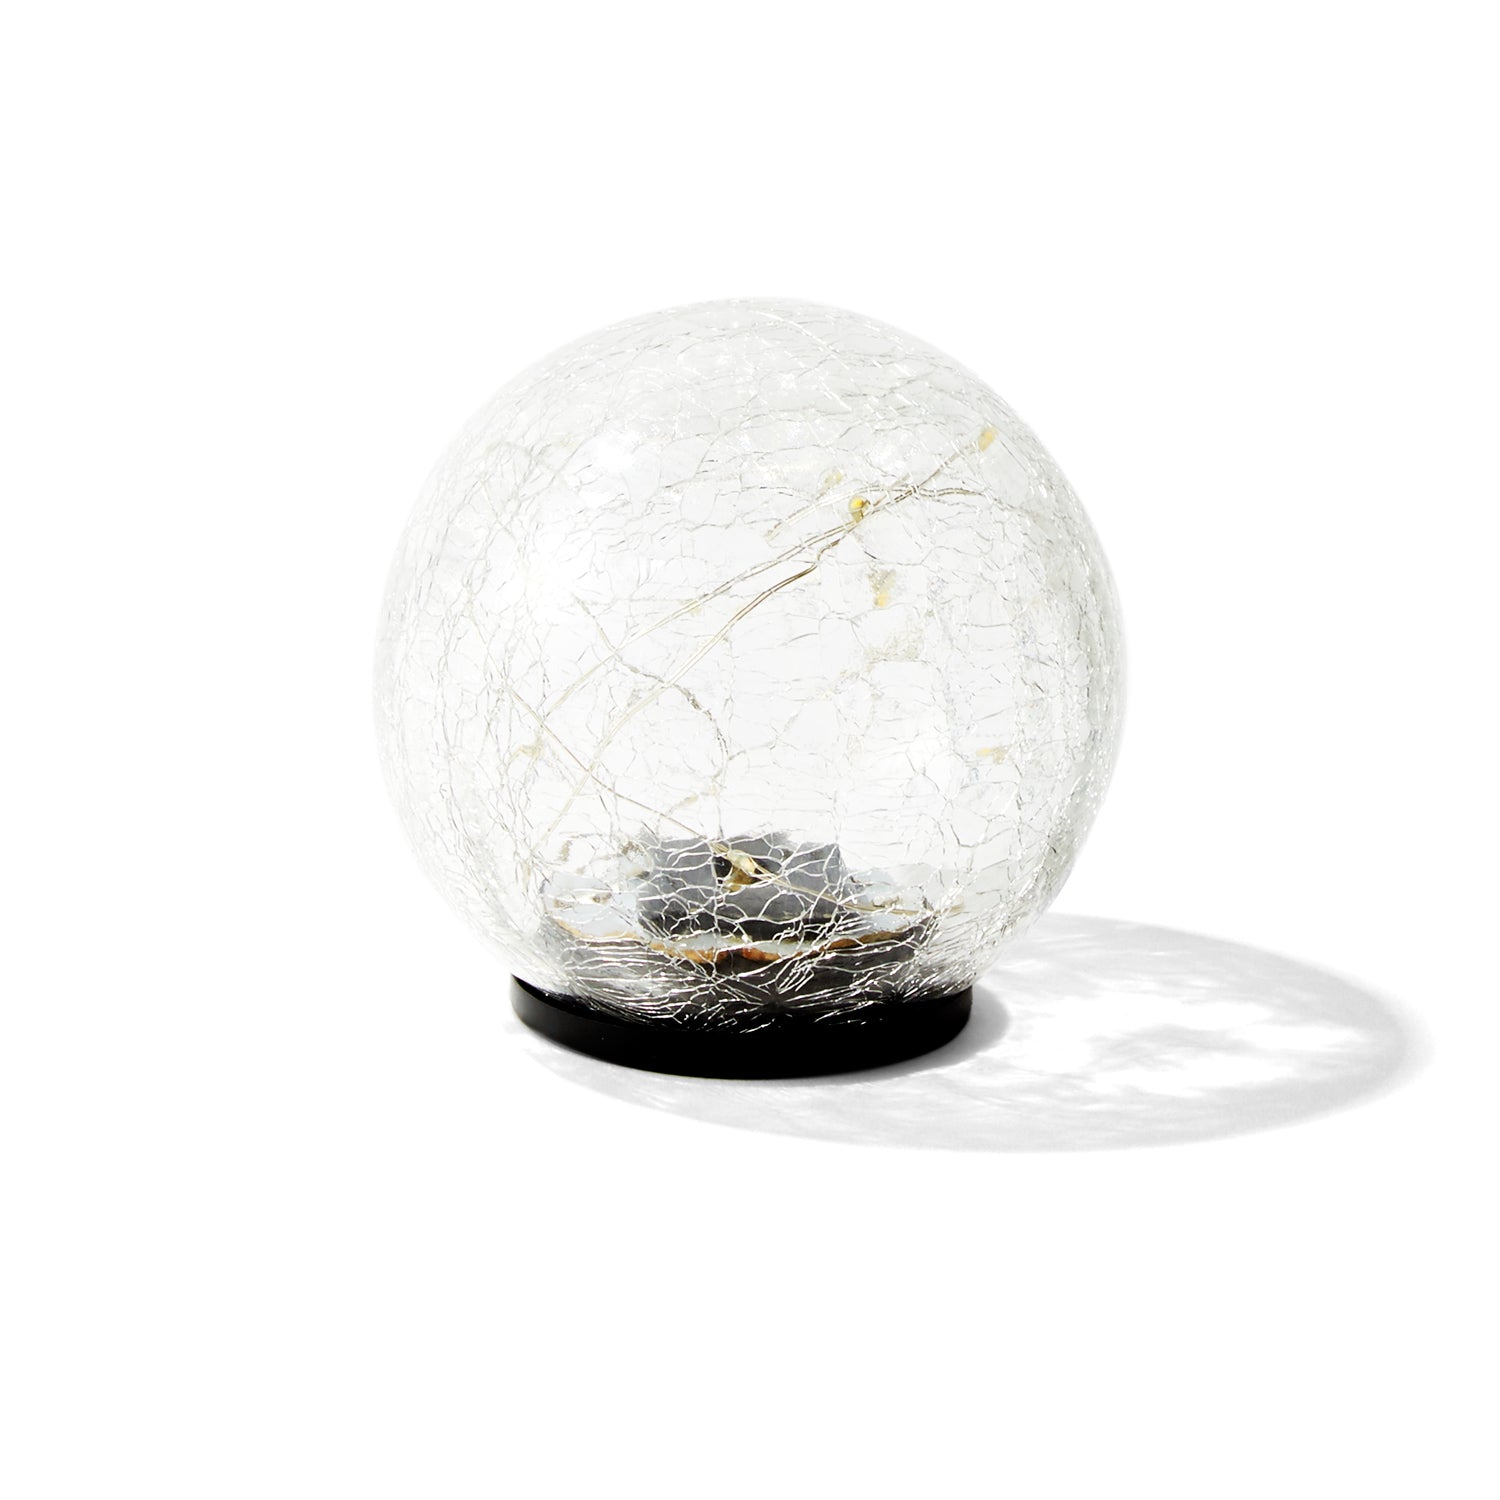 Avalon Solar Crackled Glass Globe, Medium